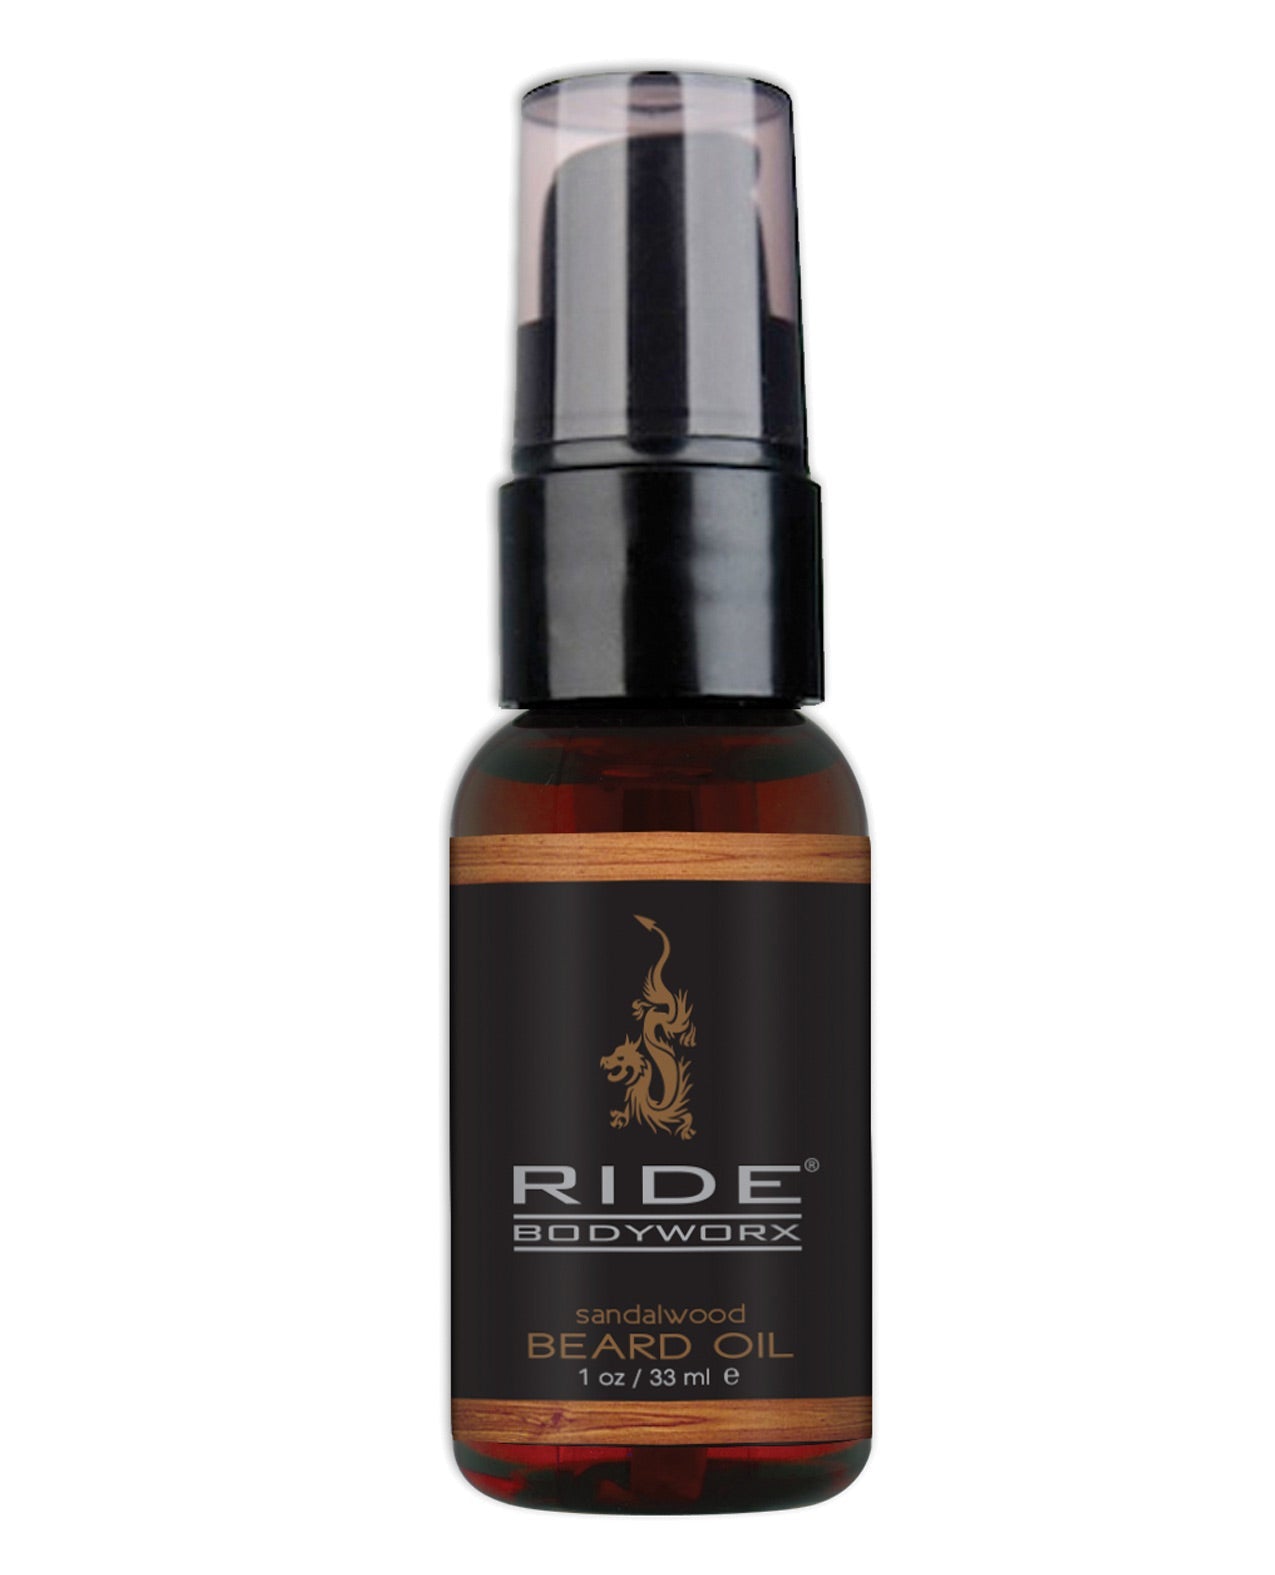 Get Sliquid Ride Bodyworx Beard Oil - 1 oz Sandalwood